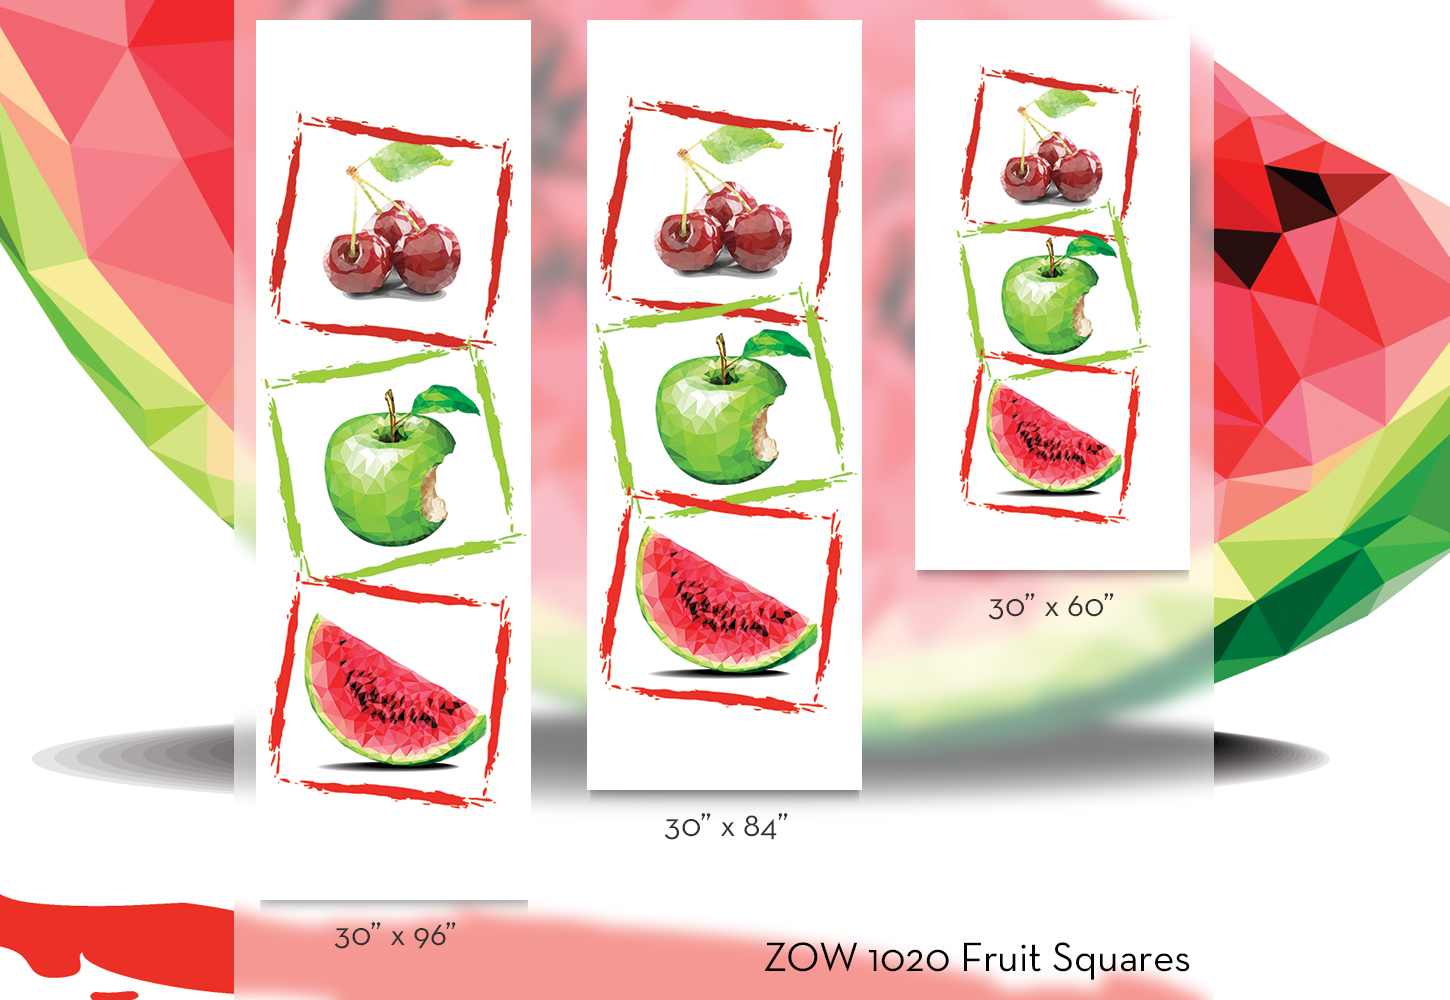 ZOW 1020 Fruit Squares